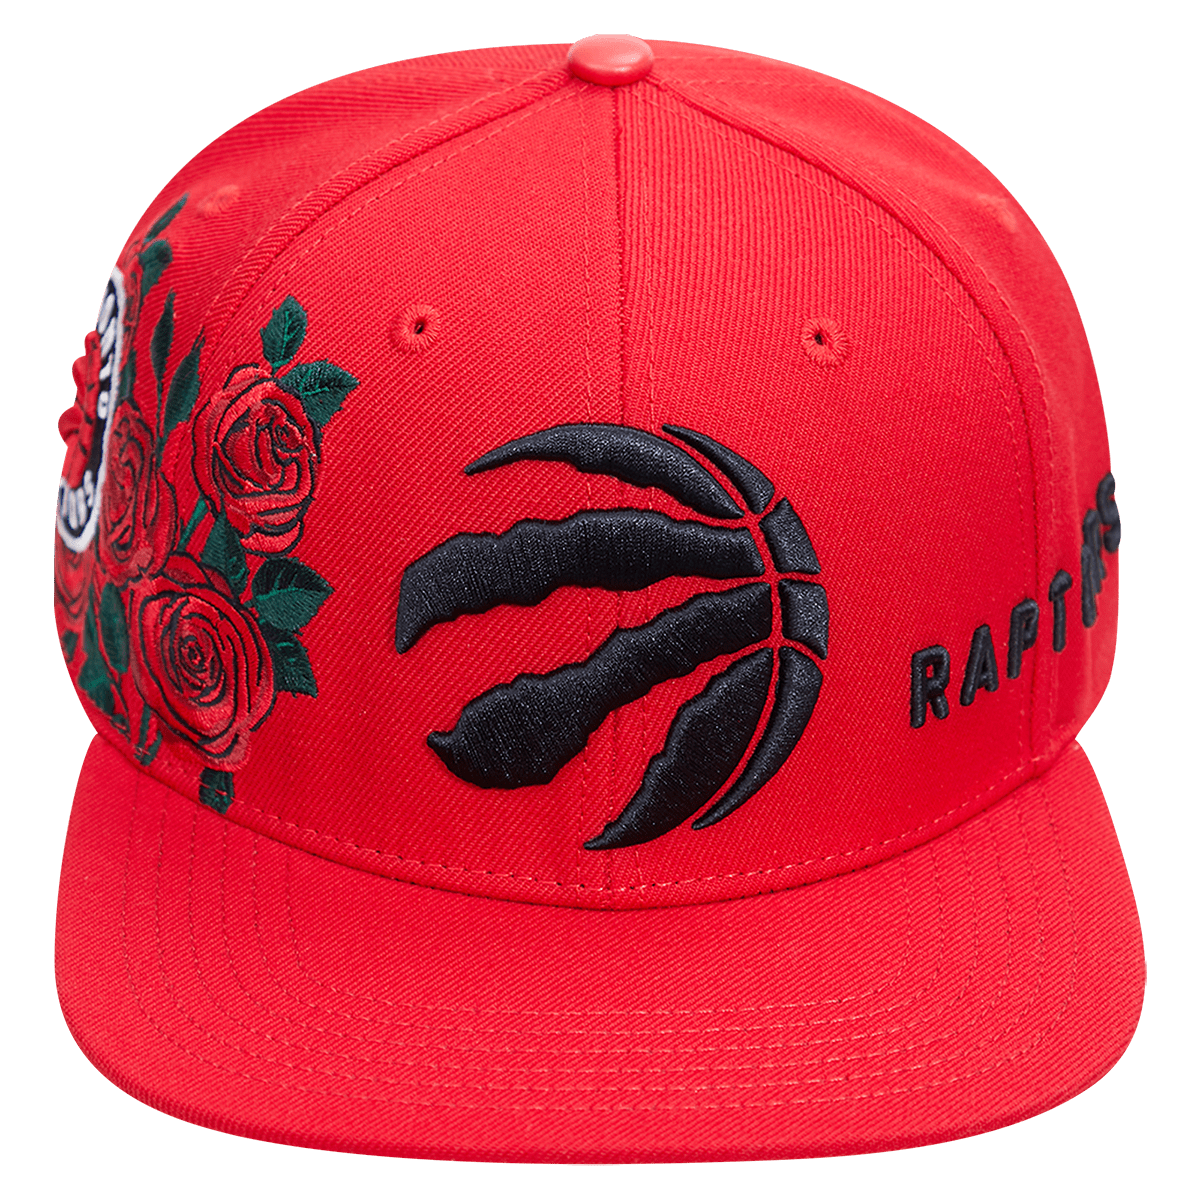 NBA TORONTO RAPTORS ROSES UNISEX SNAPBACK HAT (RED)